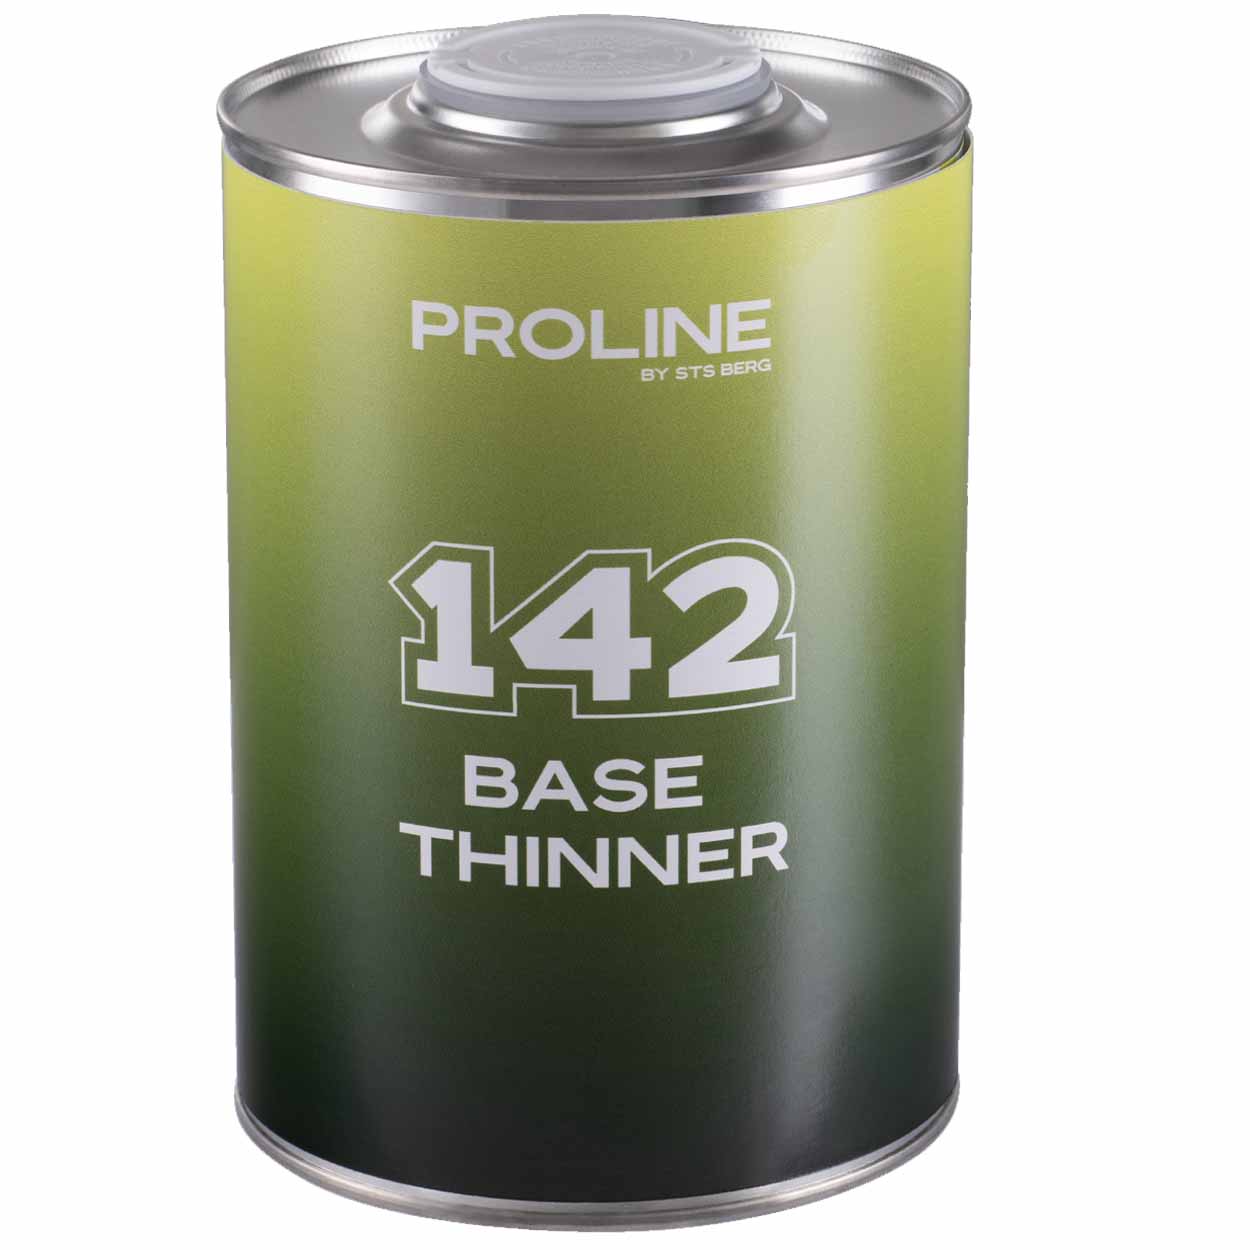 Bázové riedidlo PROLINE 142, 1 liter